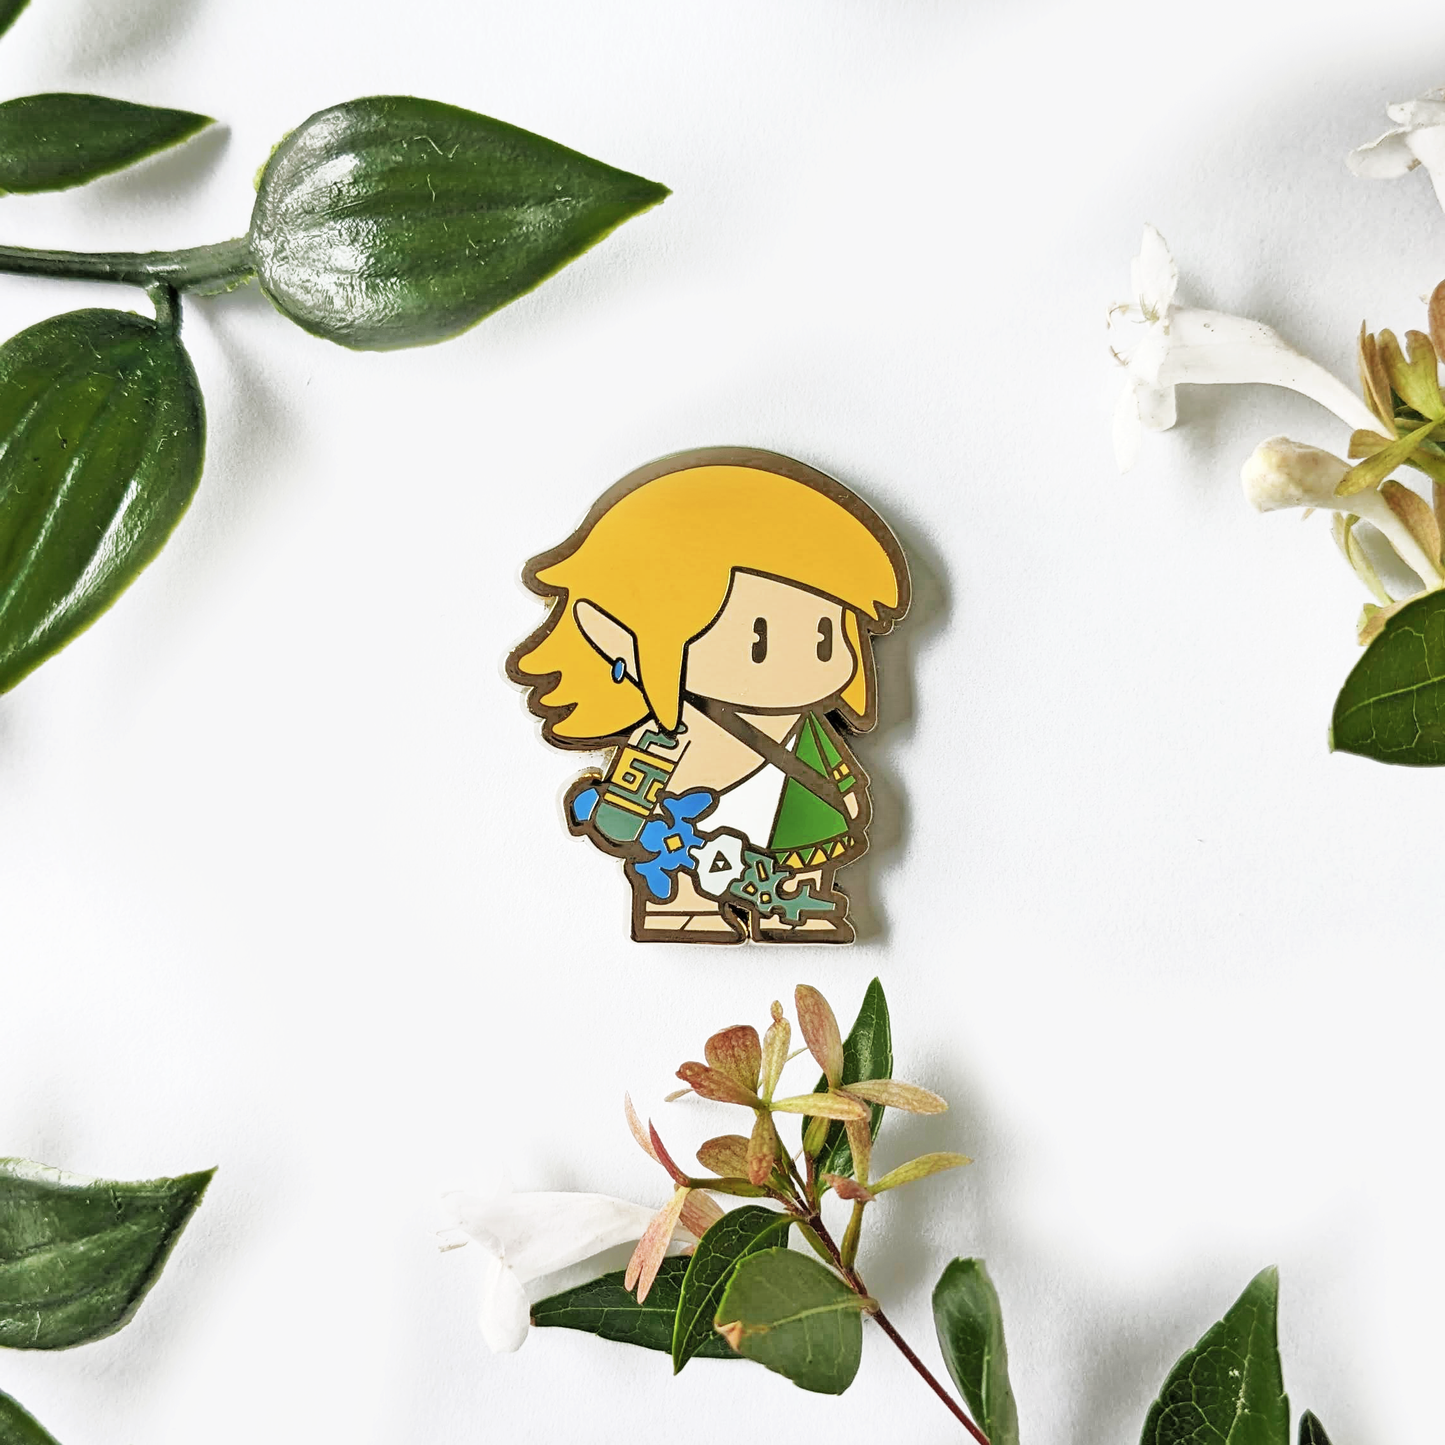 Set of 2 Pins - Chibi Link & Zelda